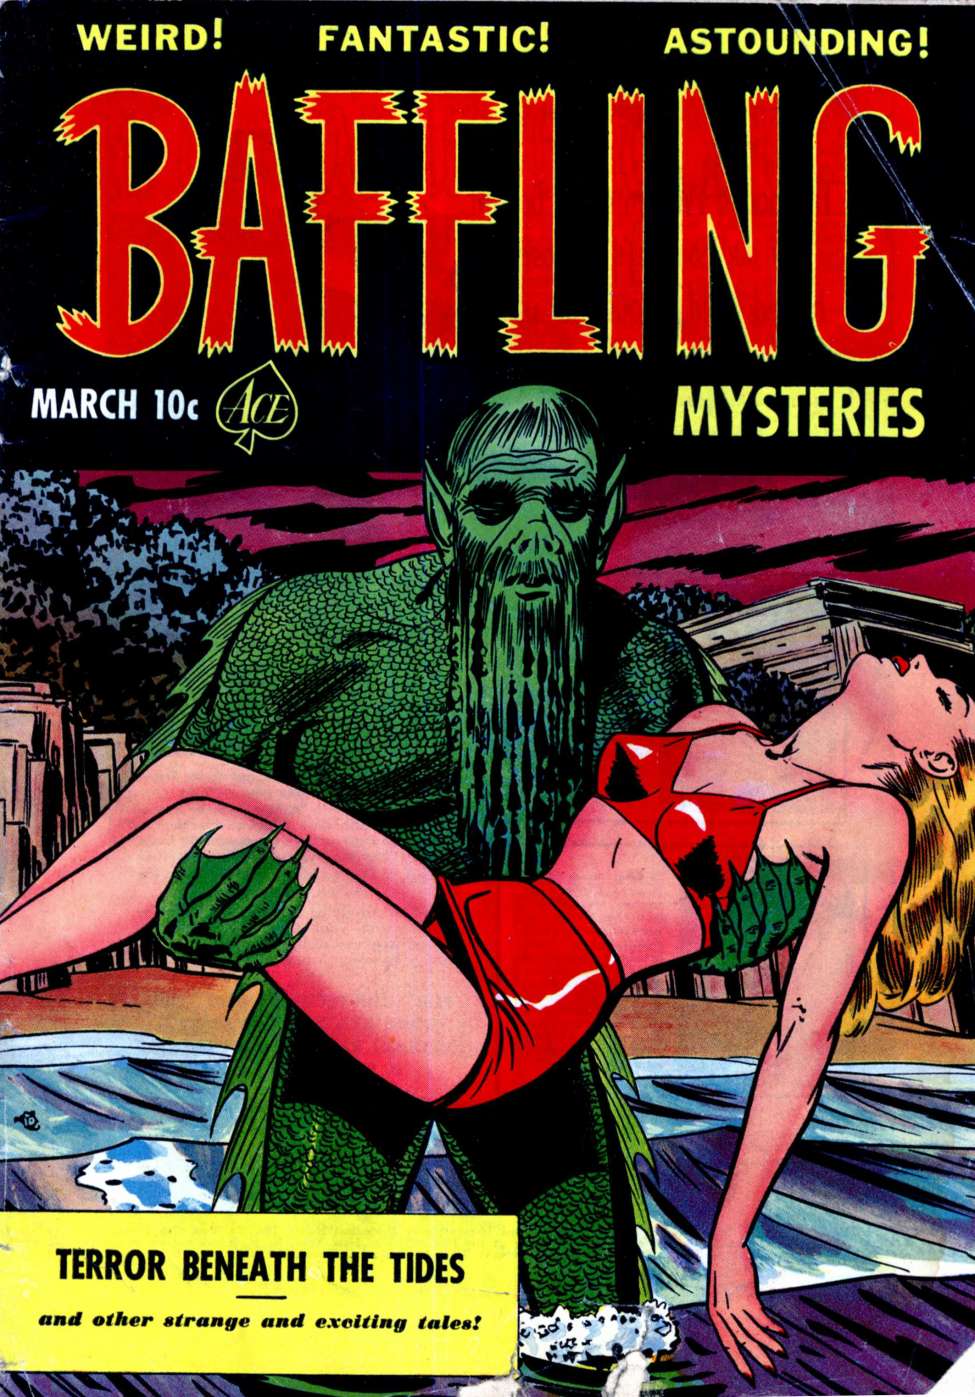 Book Cover For Baffling Mysteries 7 (alt)